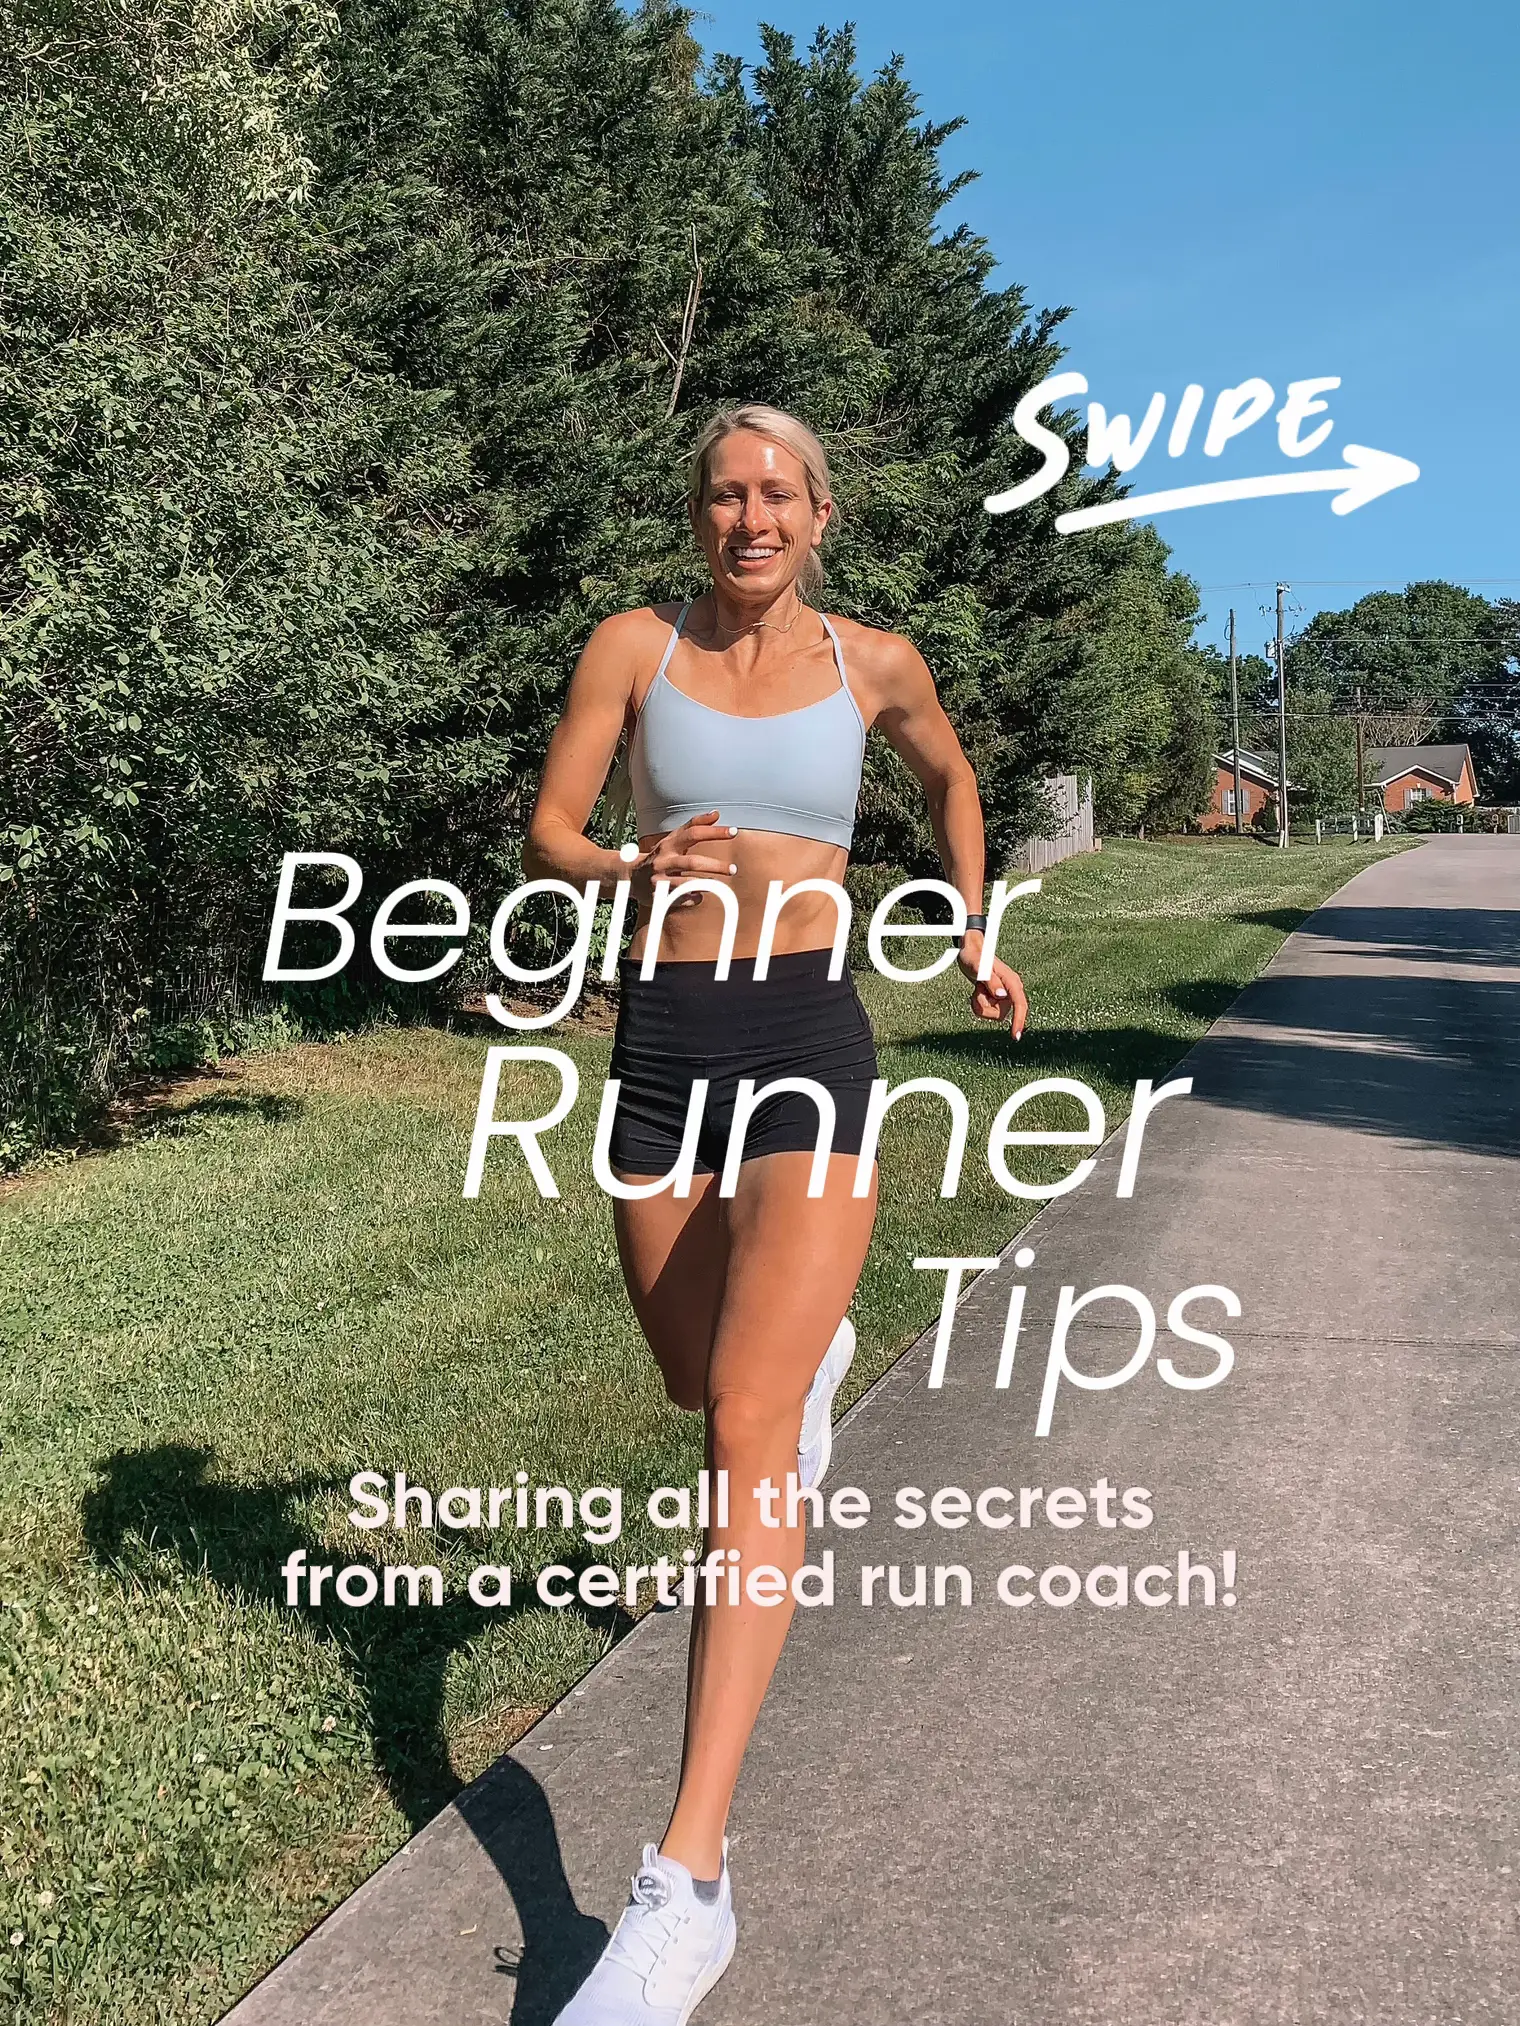 Jogging for beginners - Lemon8 Search